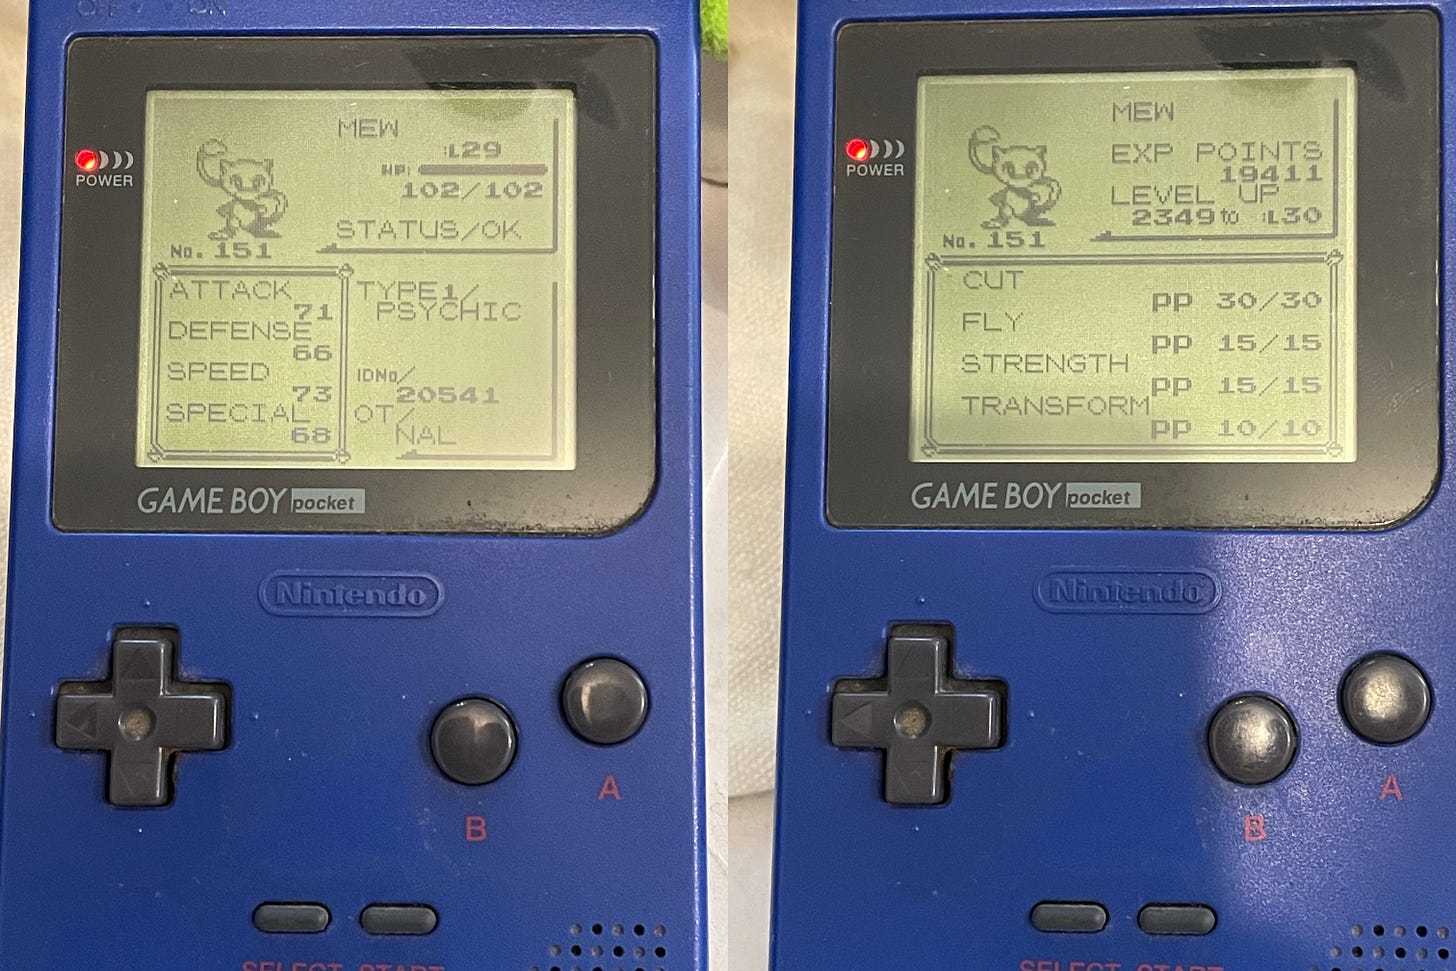 The PokéTour Mew that was sent to Tony's copy of Pokémon Blue back in 1999